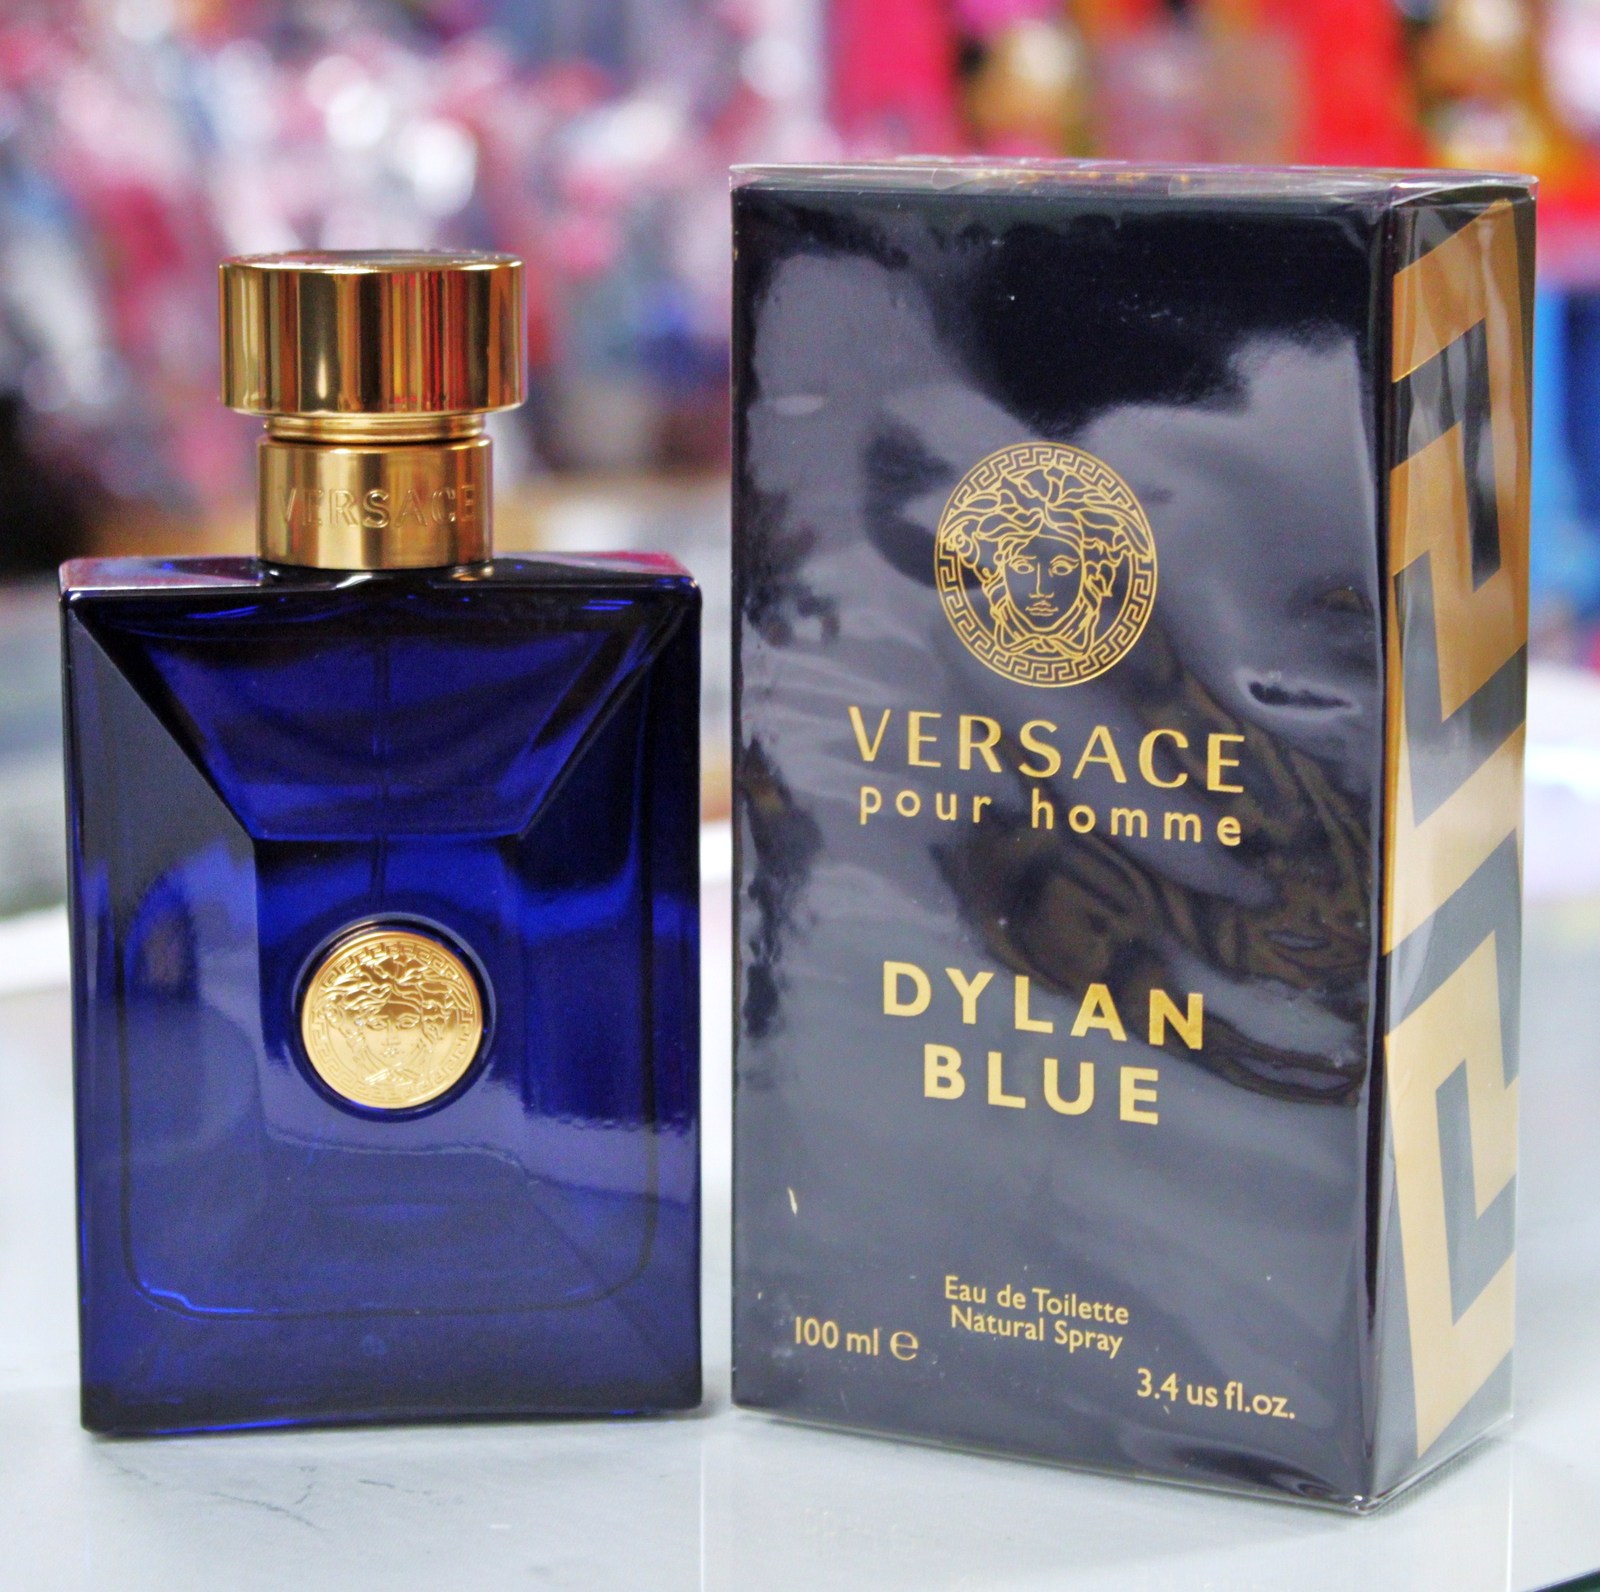 Dylan blue мужские. Versace Dylan Blue man EDT 100 мл. Versace pour homme Dylan Blue 100ml. Versace pour homme Dylan Blue 100 ml Парфюм духи. Версаче Dylan Blue мужские.